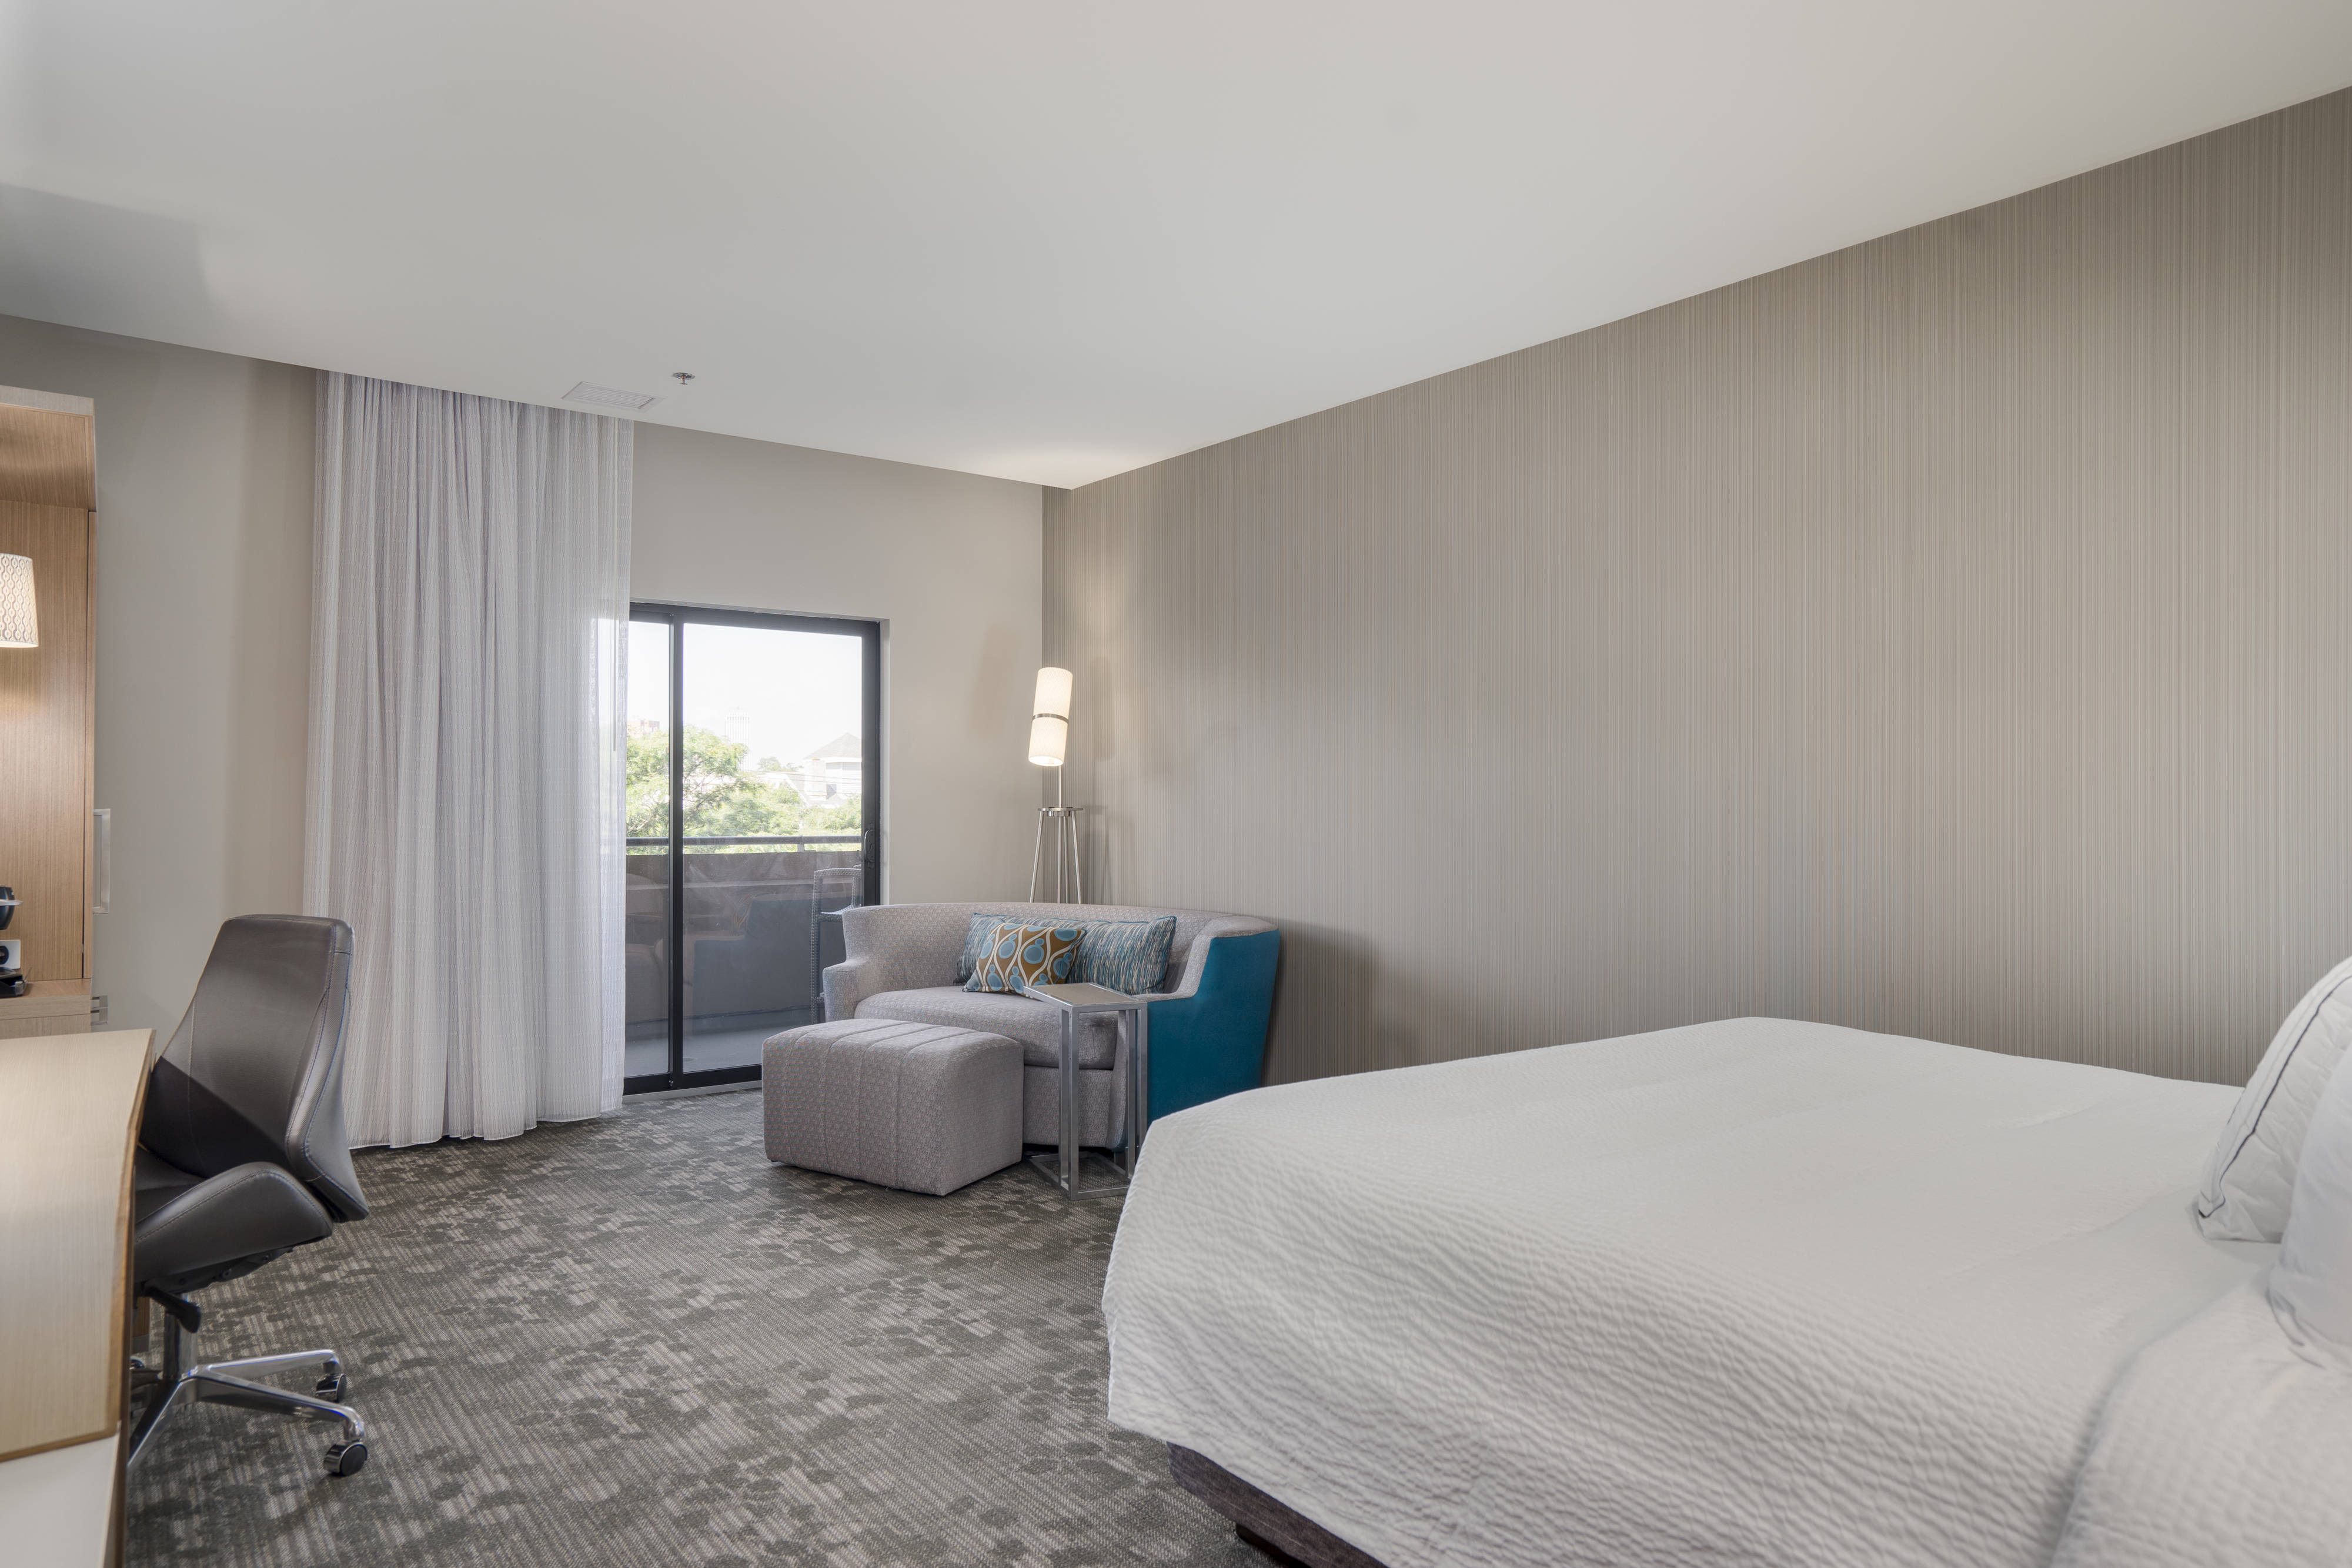 hardwood flooring niagara falls ny of niagara falls hotel with pool courtyard for guest room